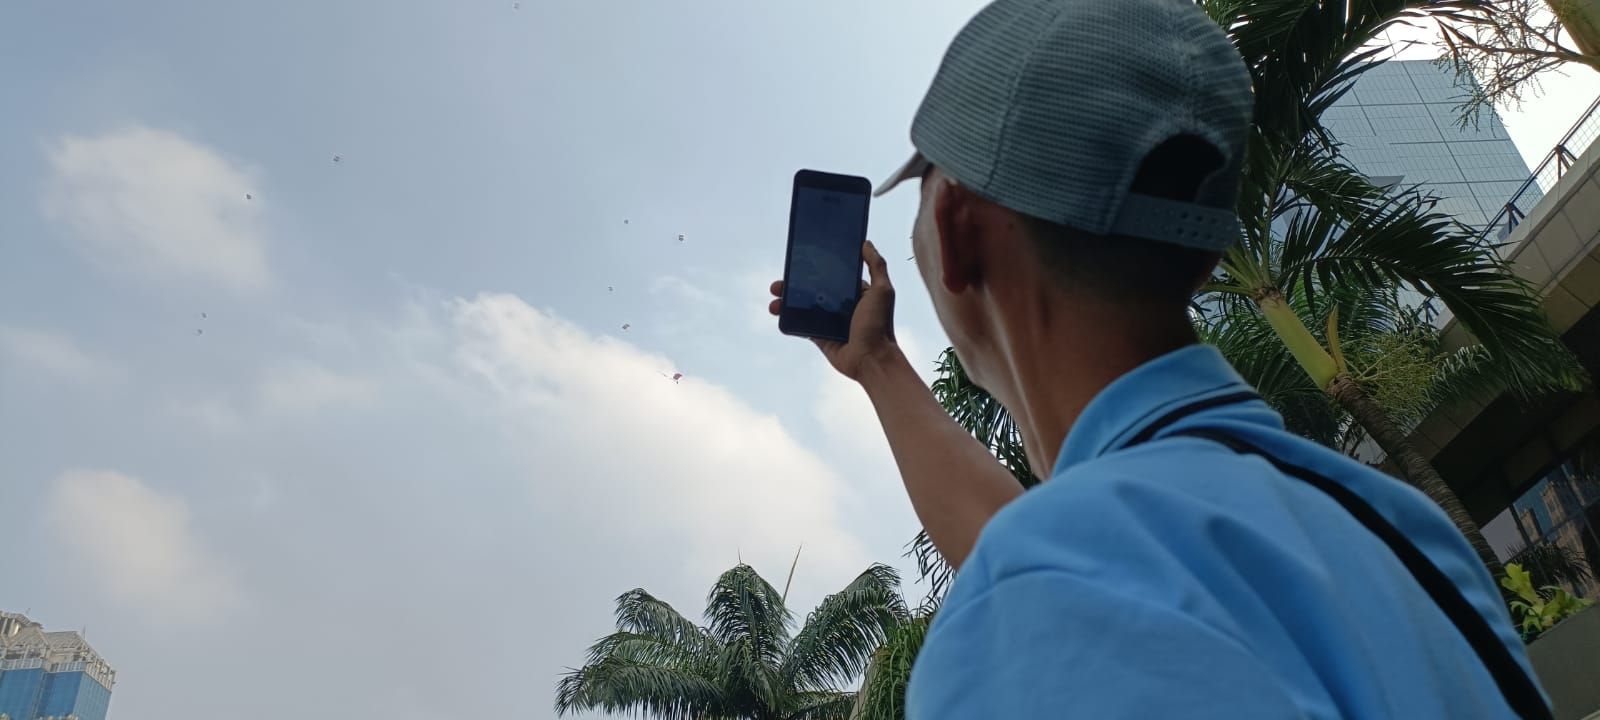 Antusiasme Warga Saksikan Perayaan HUT Ke-78 TNI, Rekam Aksi Prajurit Terjun Payung